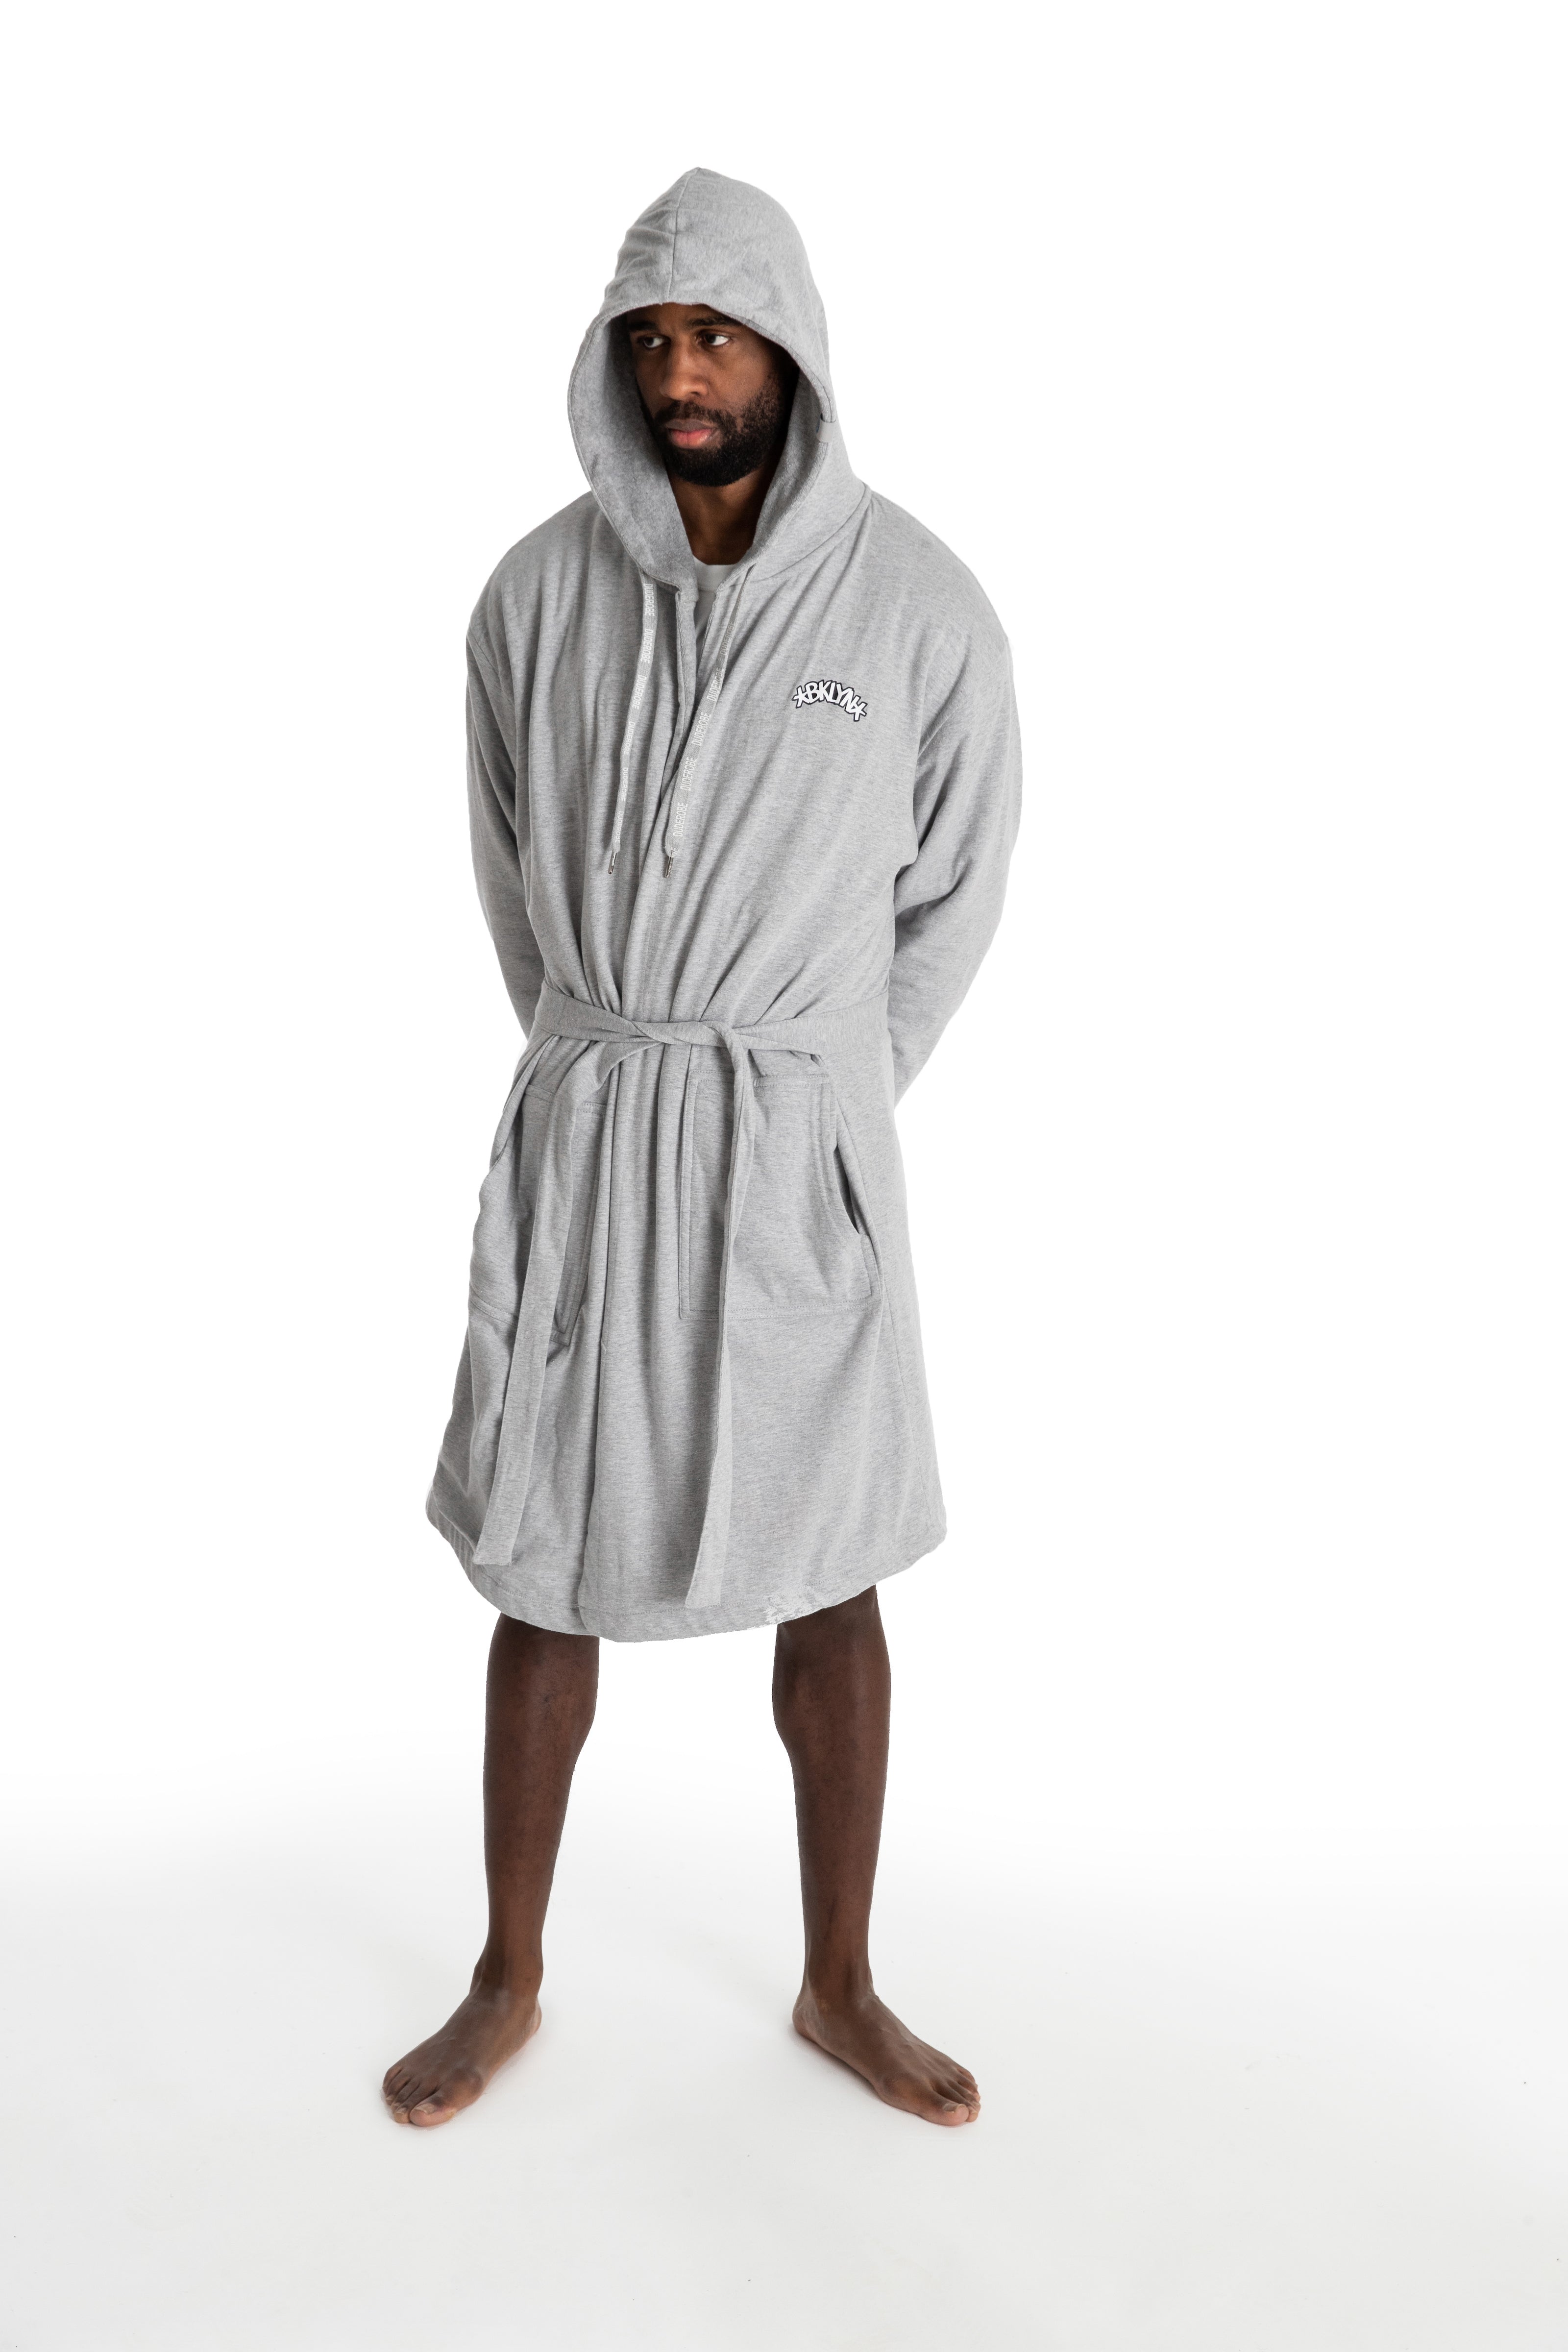 Official NBA James Harden Sleepwear, NBA Underwear, Pajamas, Robes